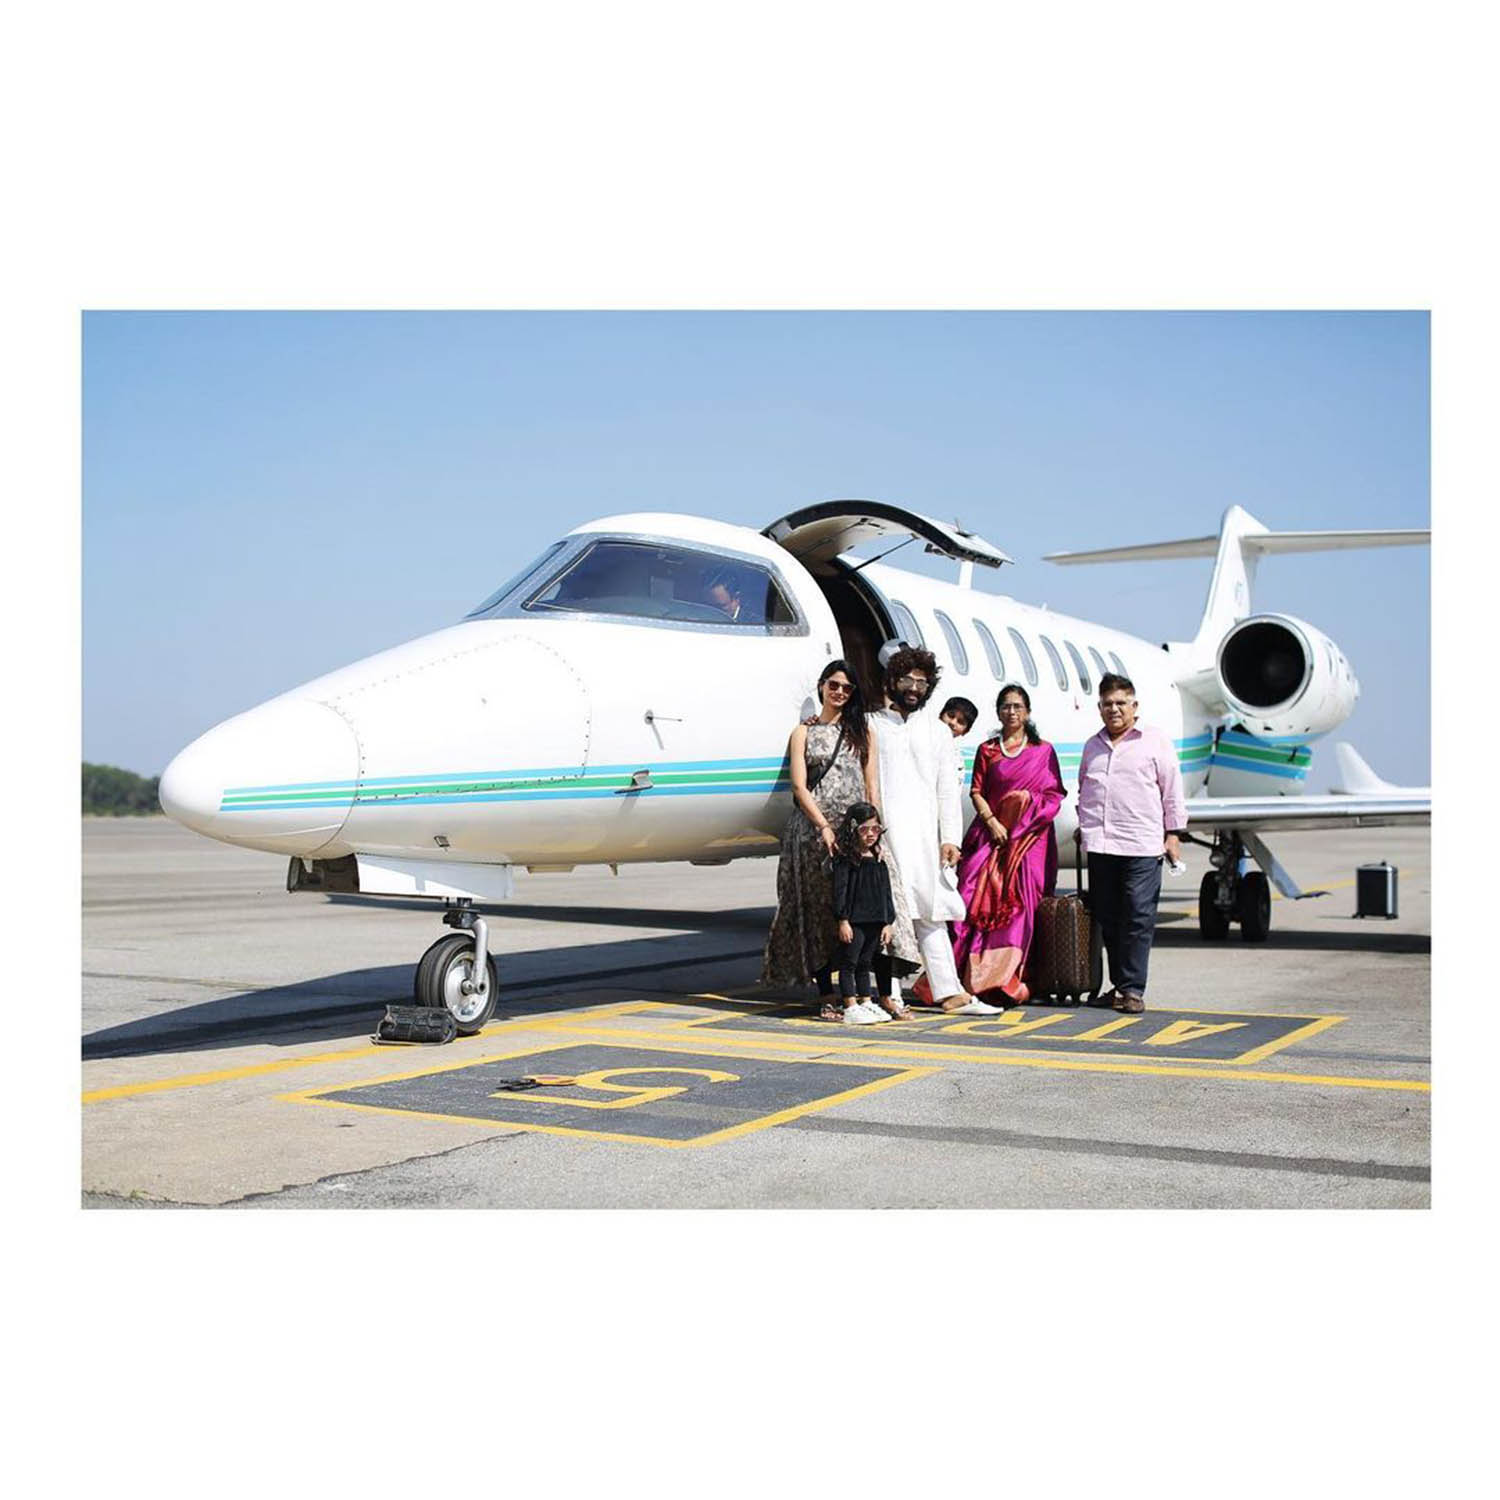 allu arjun,allu arjun family,Allu Arjun and family head to Udaipur for Niharika Konidela's wedding,allu arjun latest news,tollywood film news,allu arjun and family latest pics,allu arjun and family fly private jet